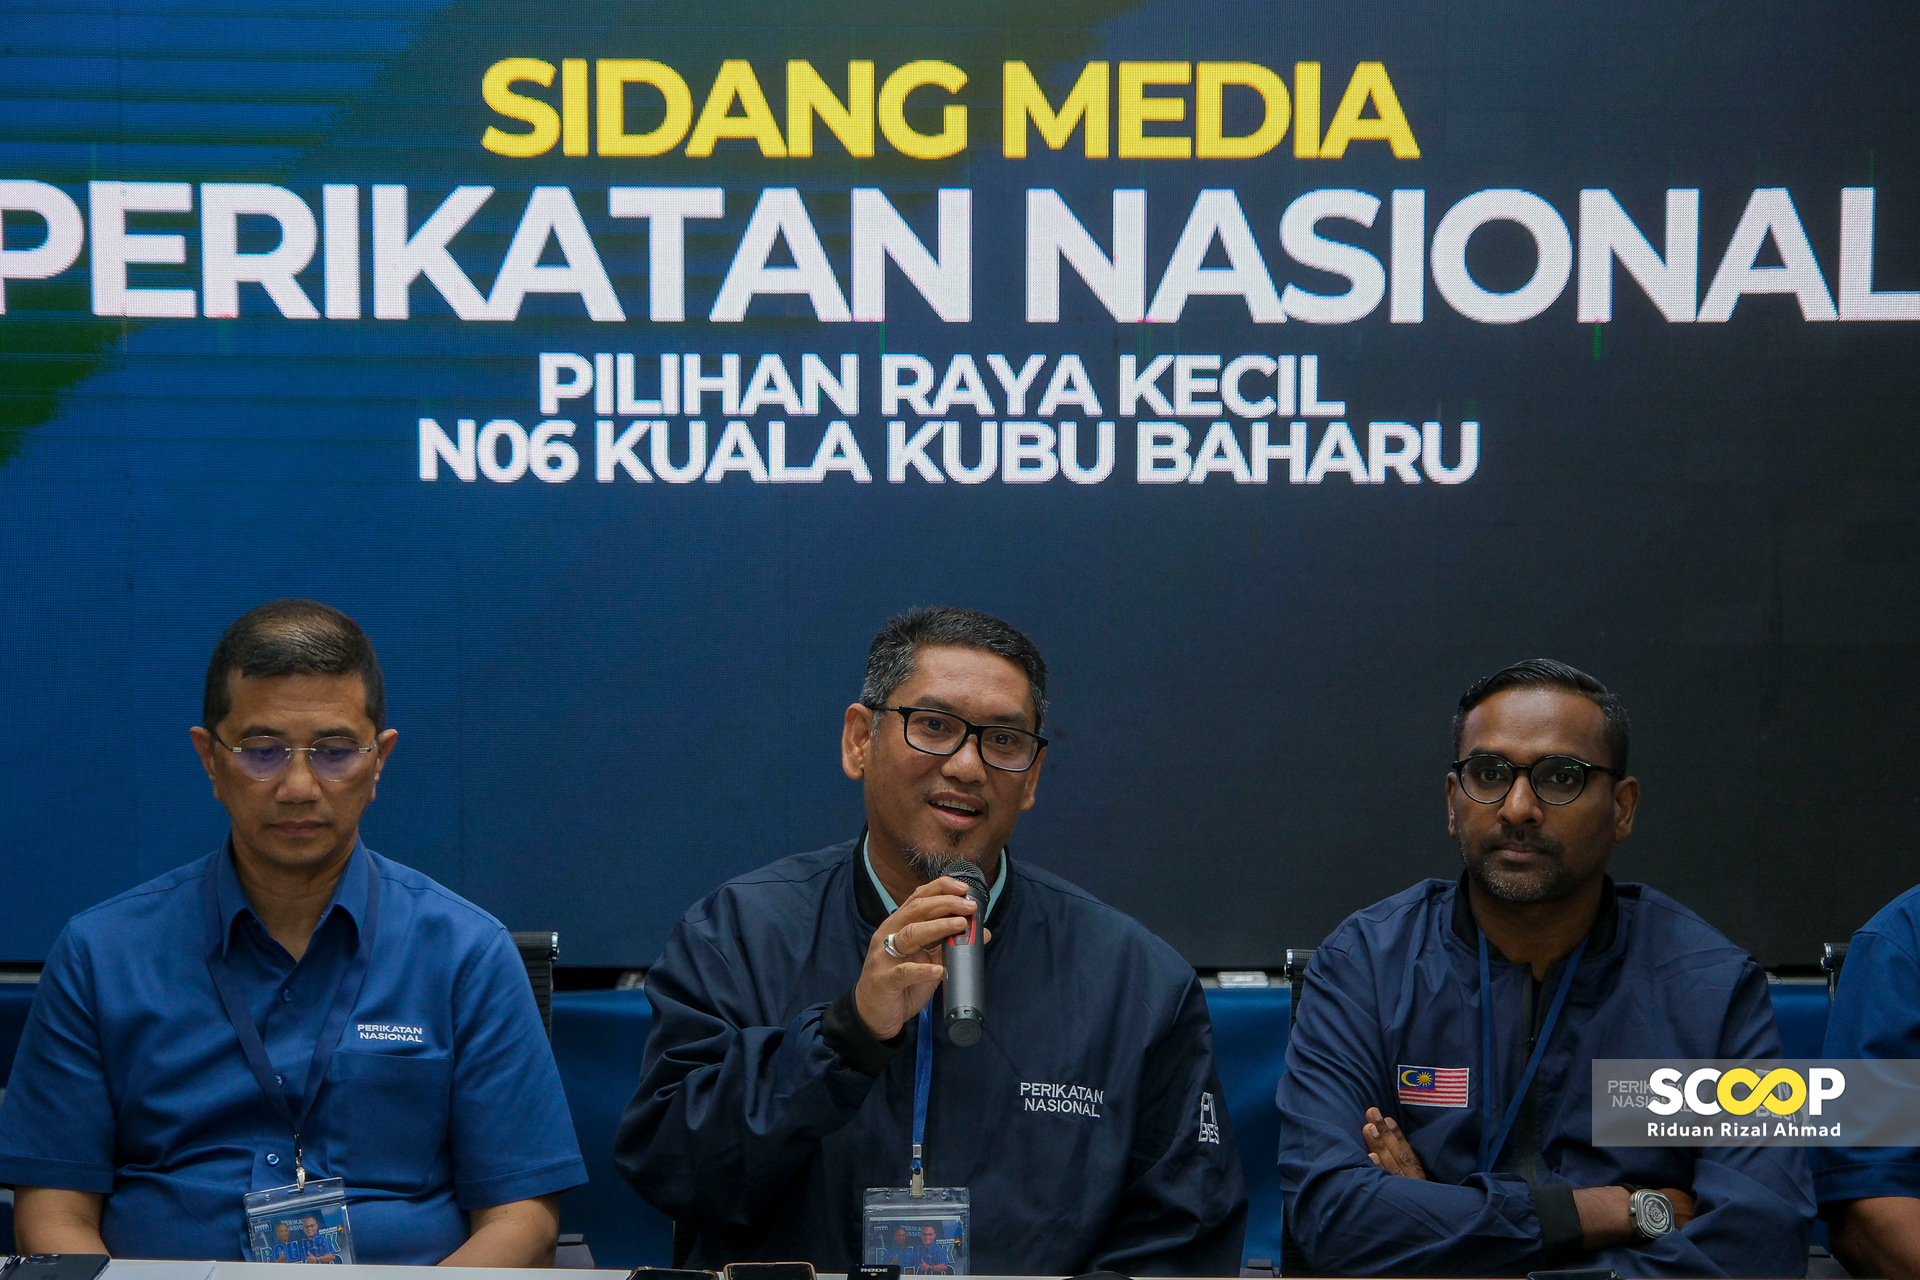 Perikatan cites low voter turnout as key reason for its defeat in Kuala Kubu Baharu